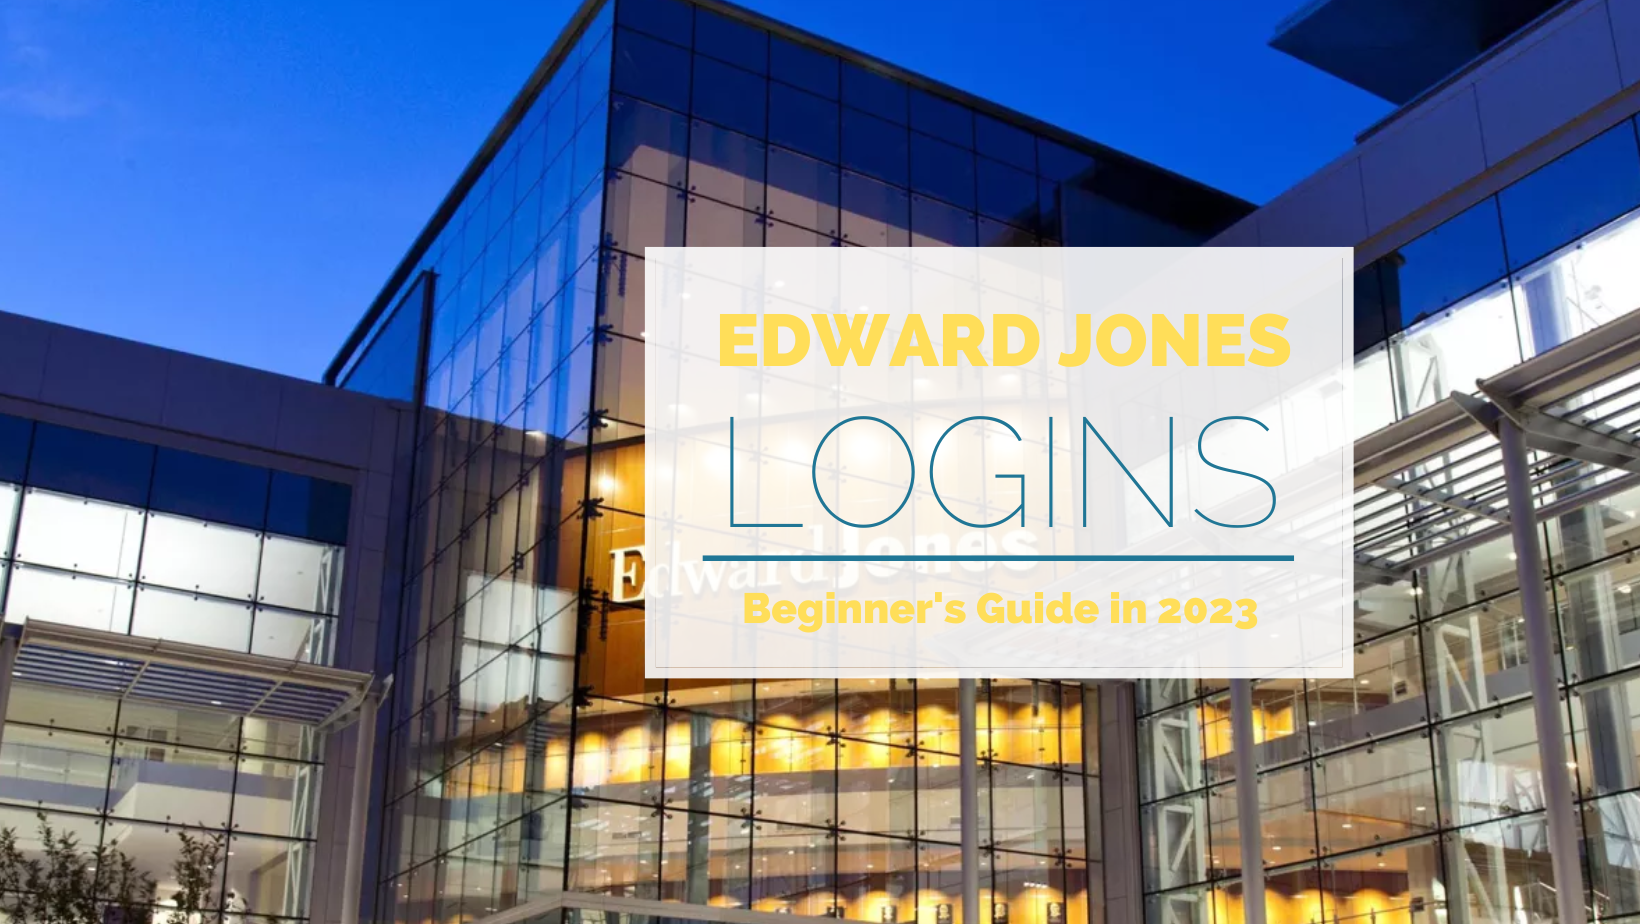 Edward Jones Logins